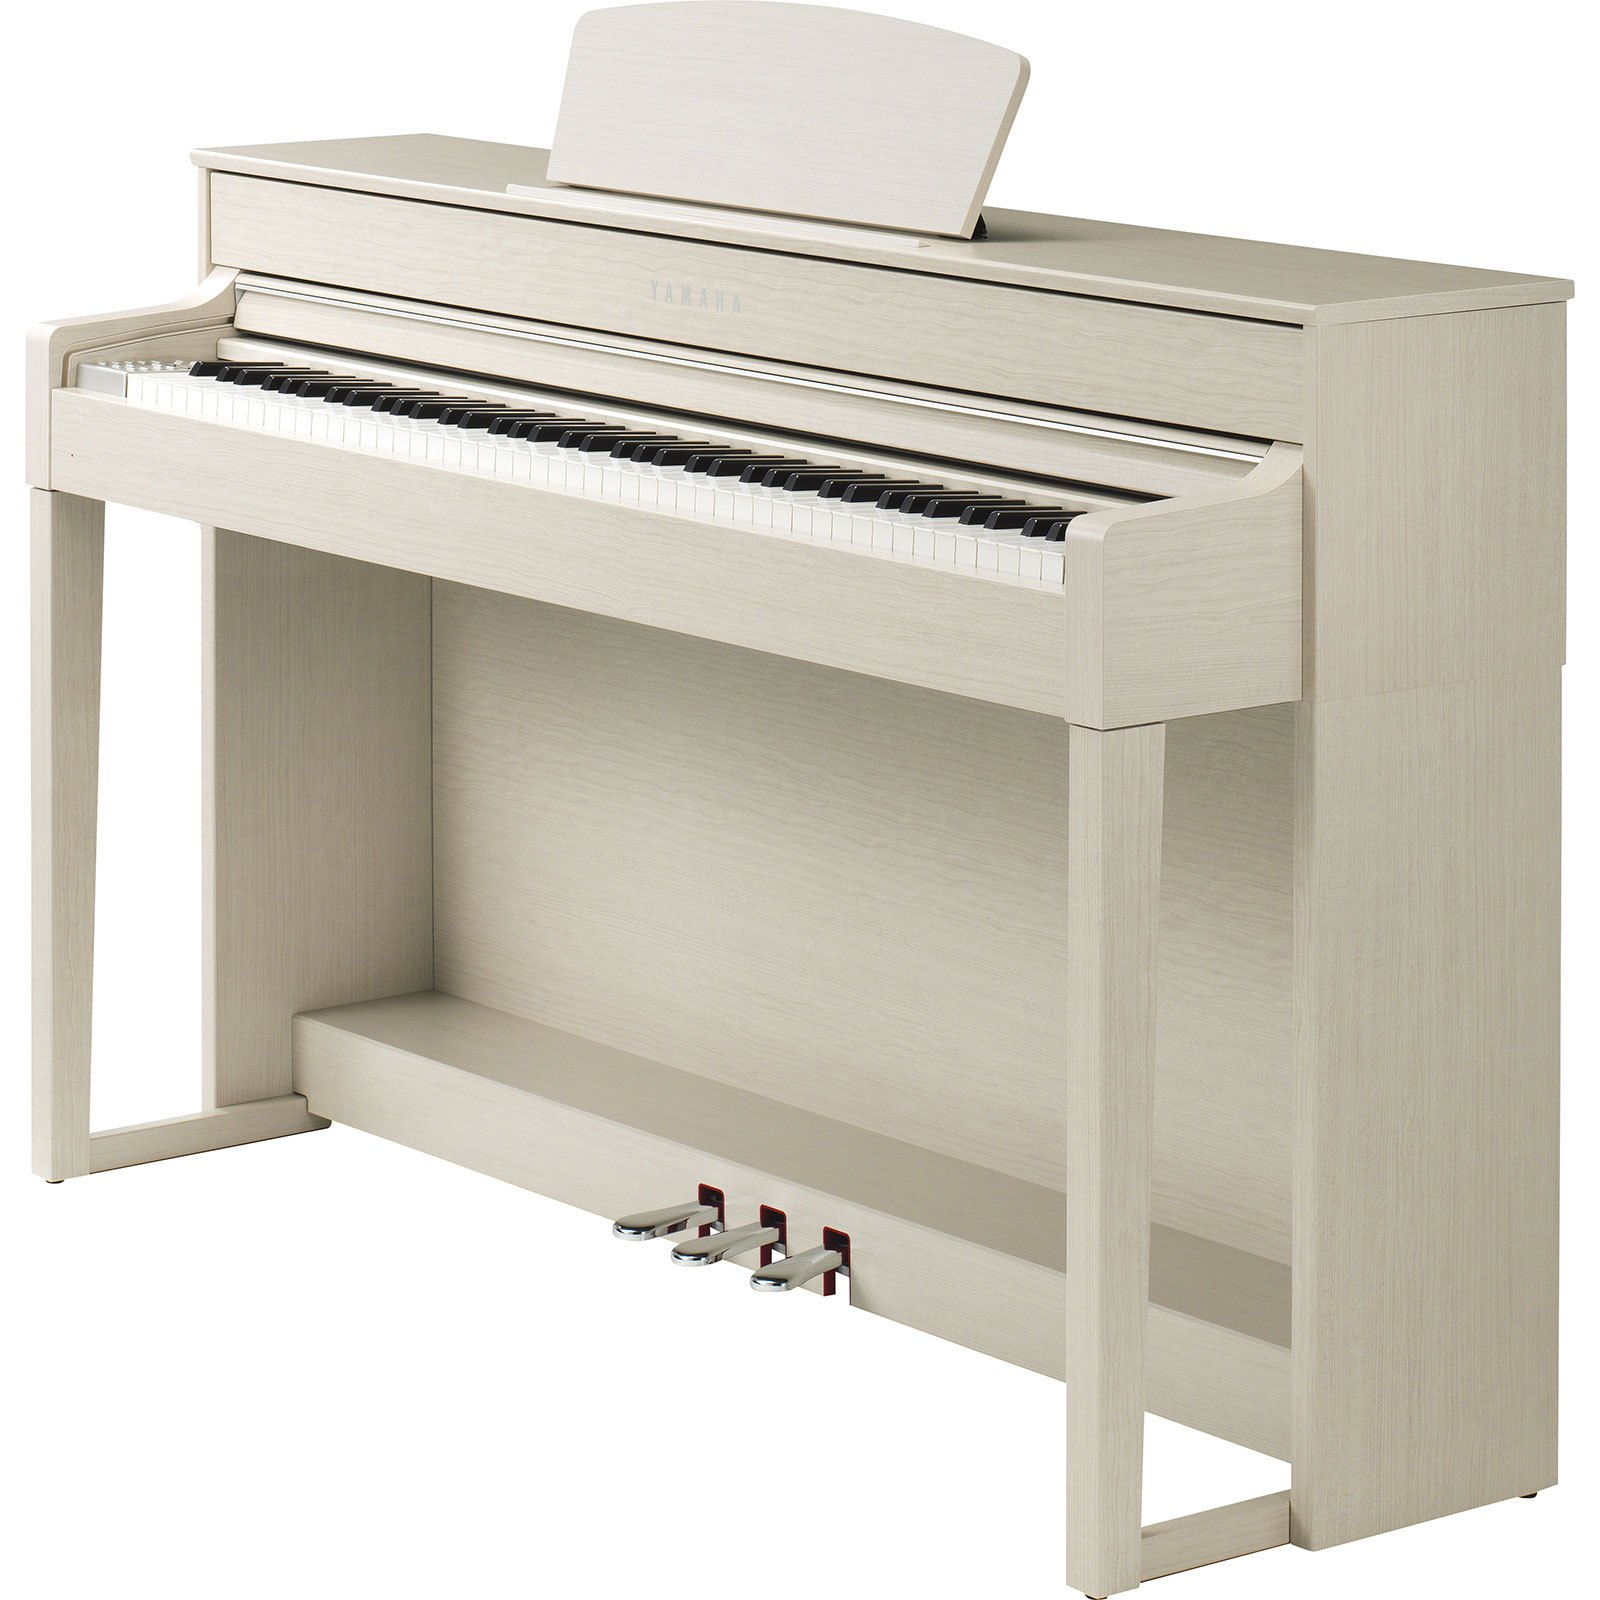 CLP-535 - Overview - Clavinova - Pianos - Musical Instruments 